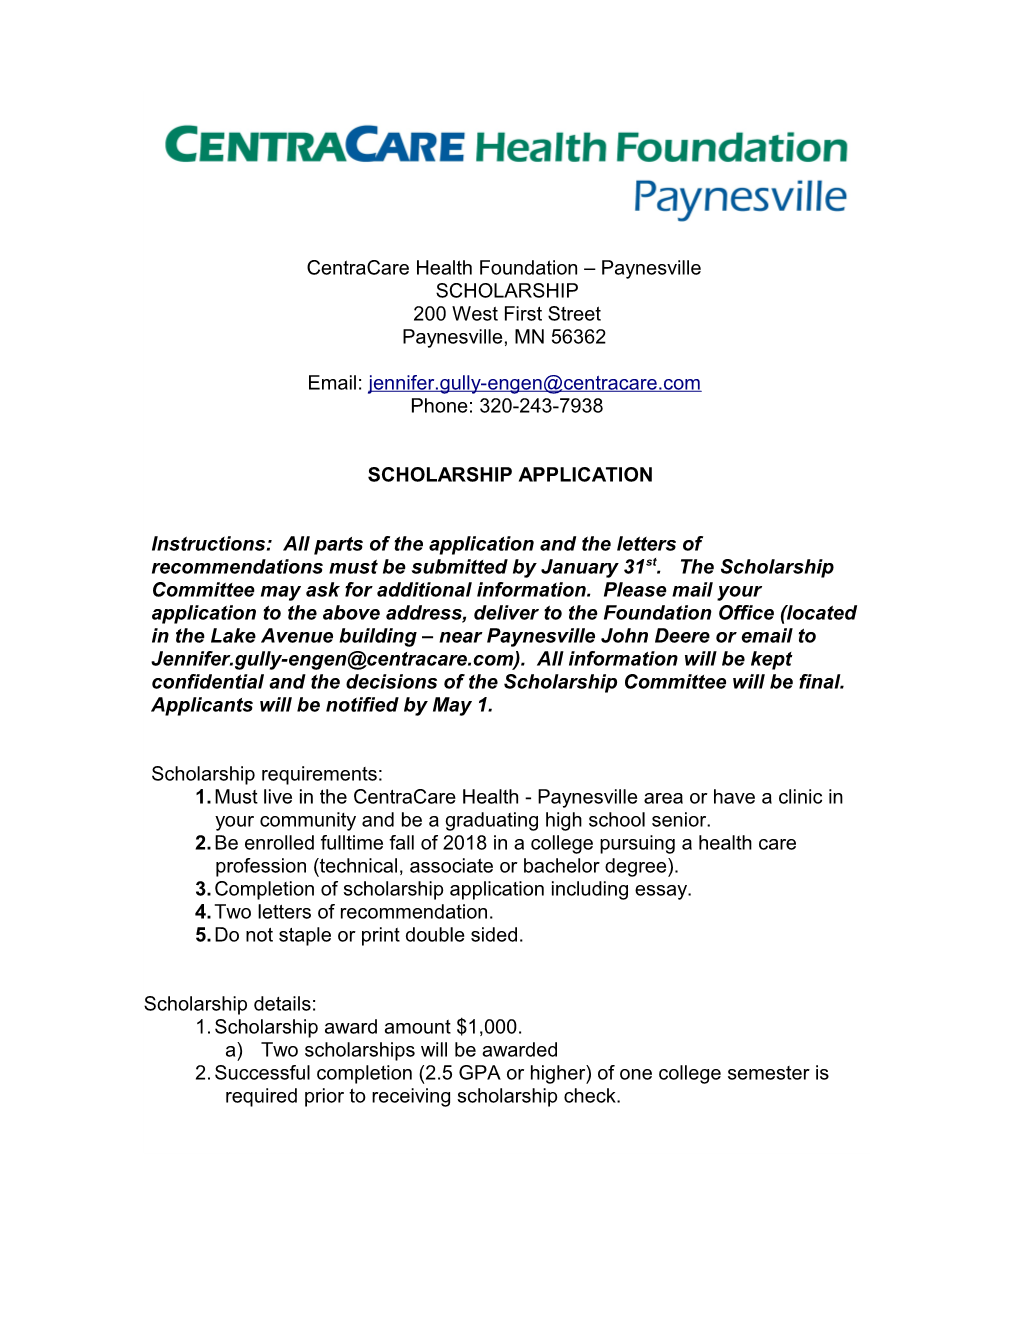 CCH Foundation - Paynesville Scholarship Application